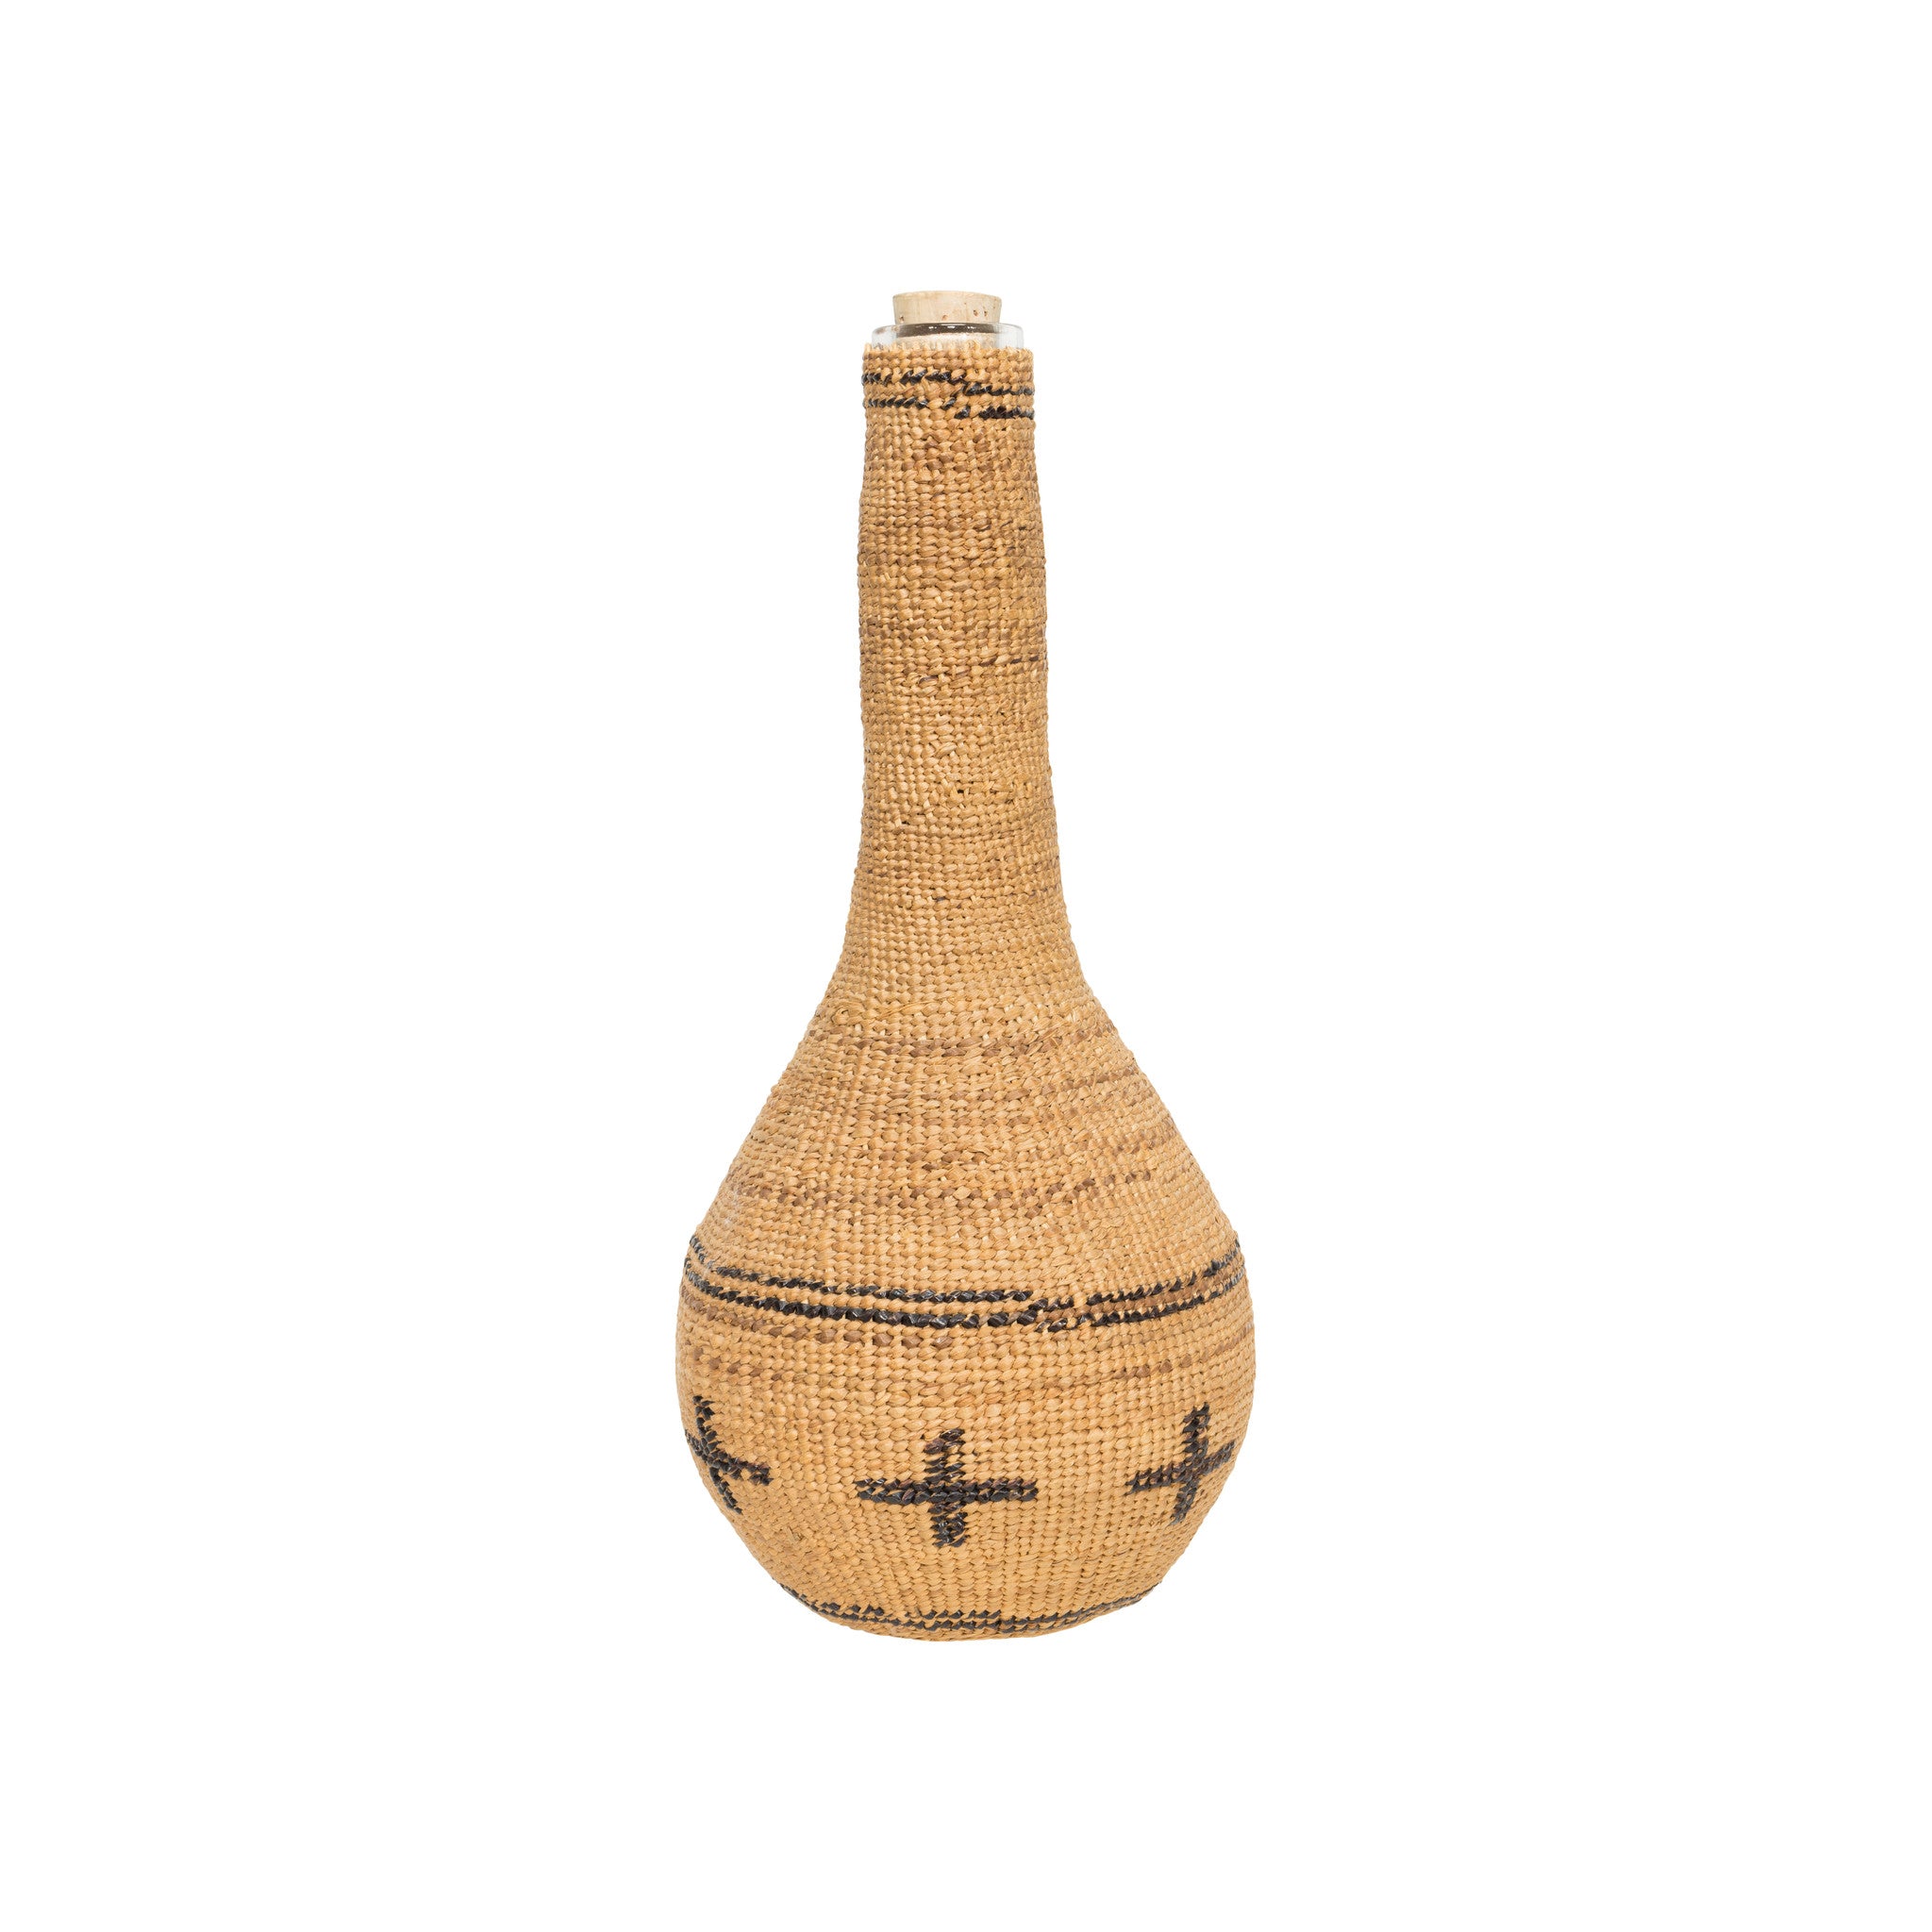 Hupa/Yurok Bottle Basket